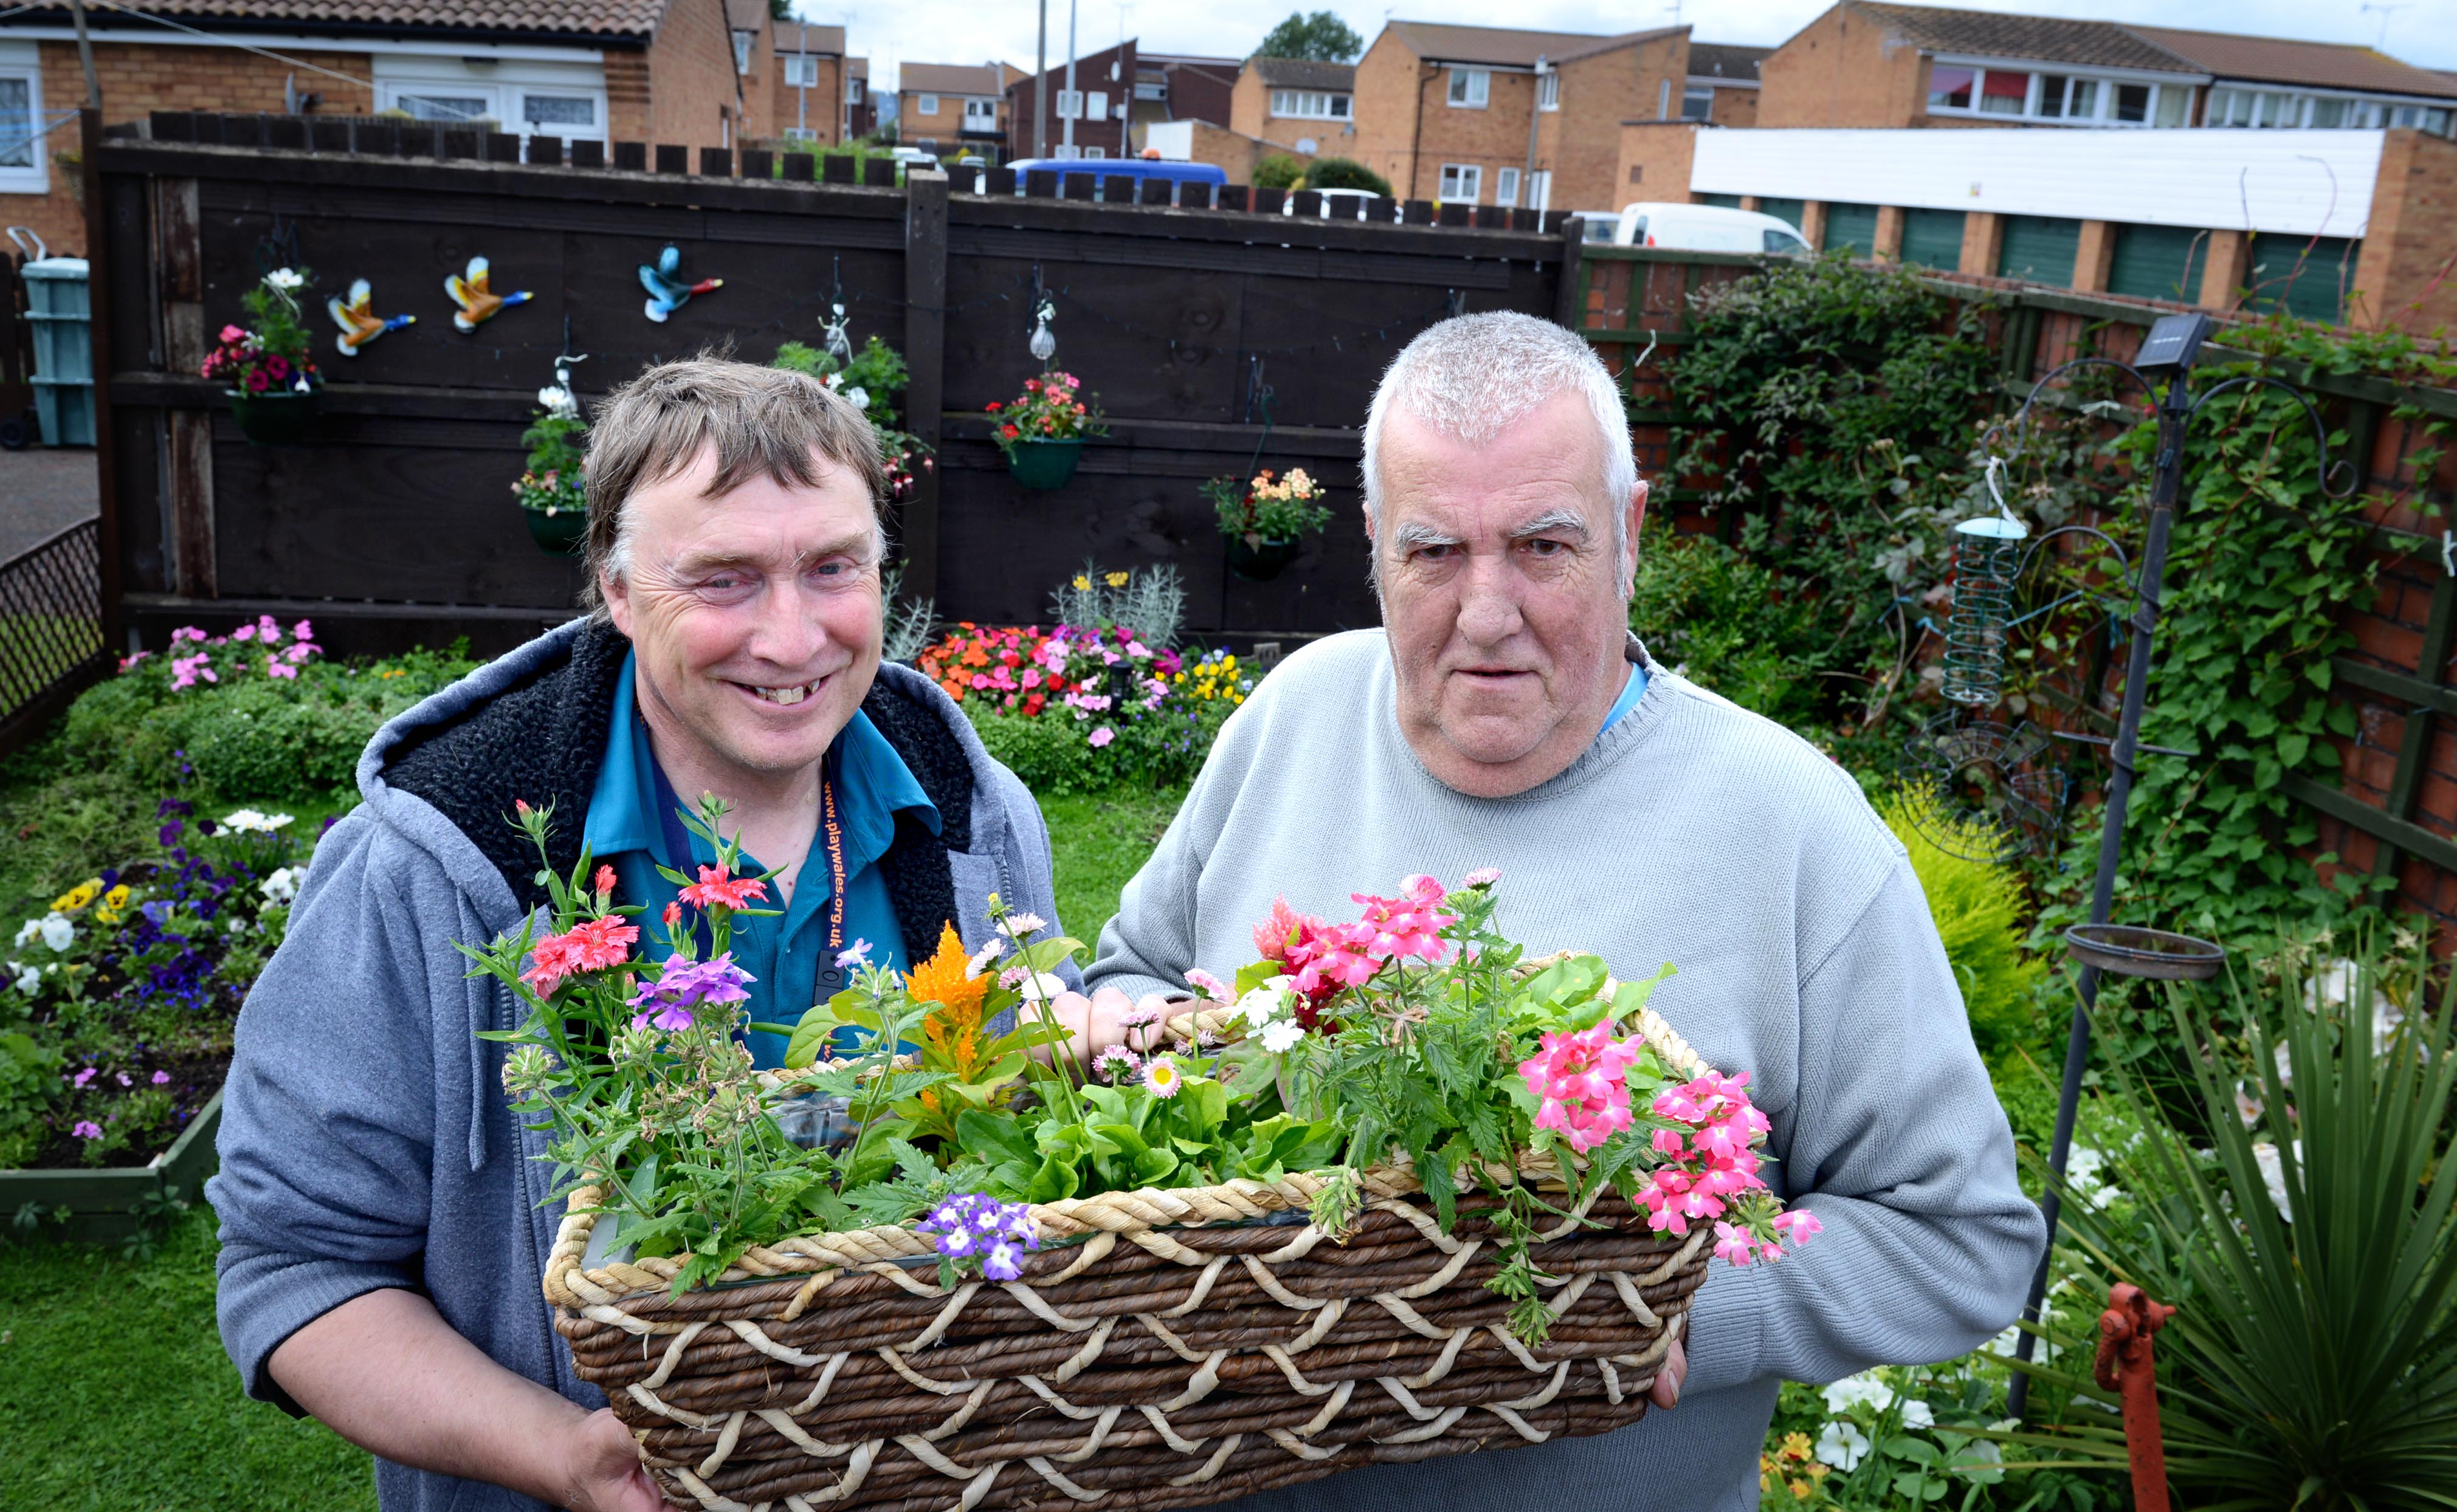 Green-fingered Gerald unveils community garden at fun day